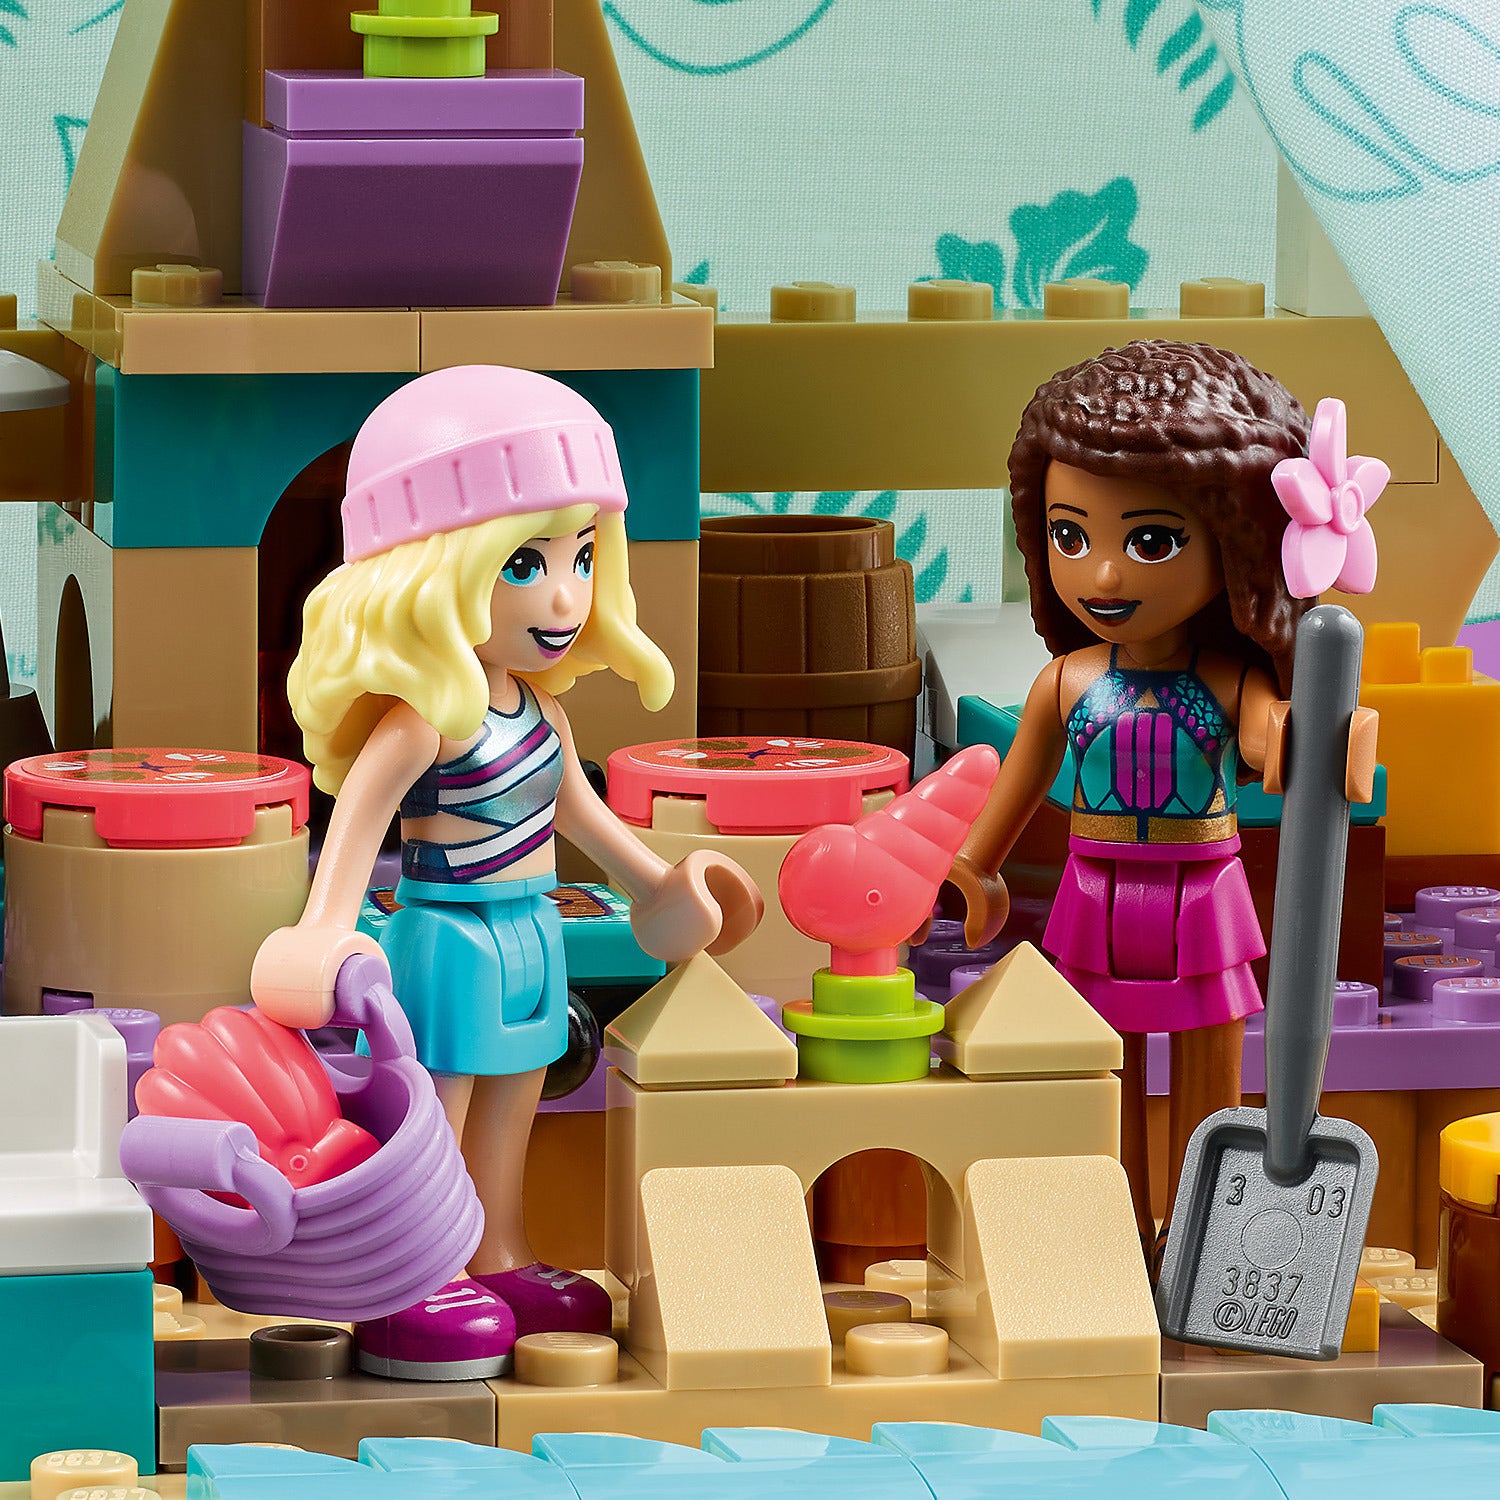 LEGO® Friends: Beach Glamping